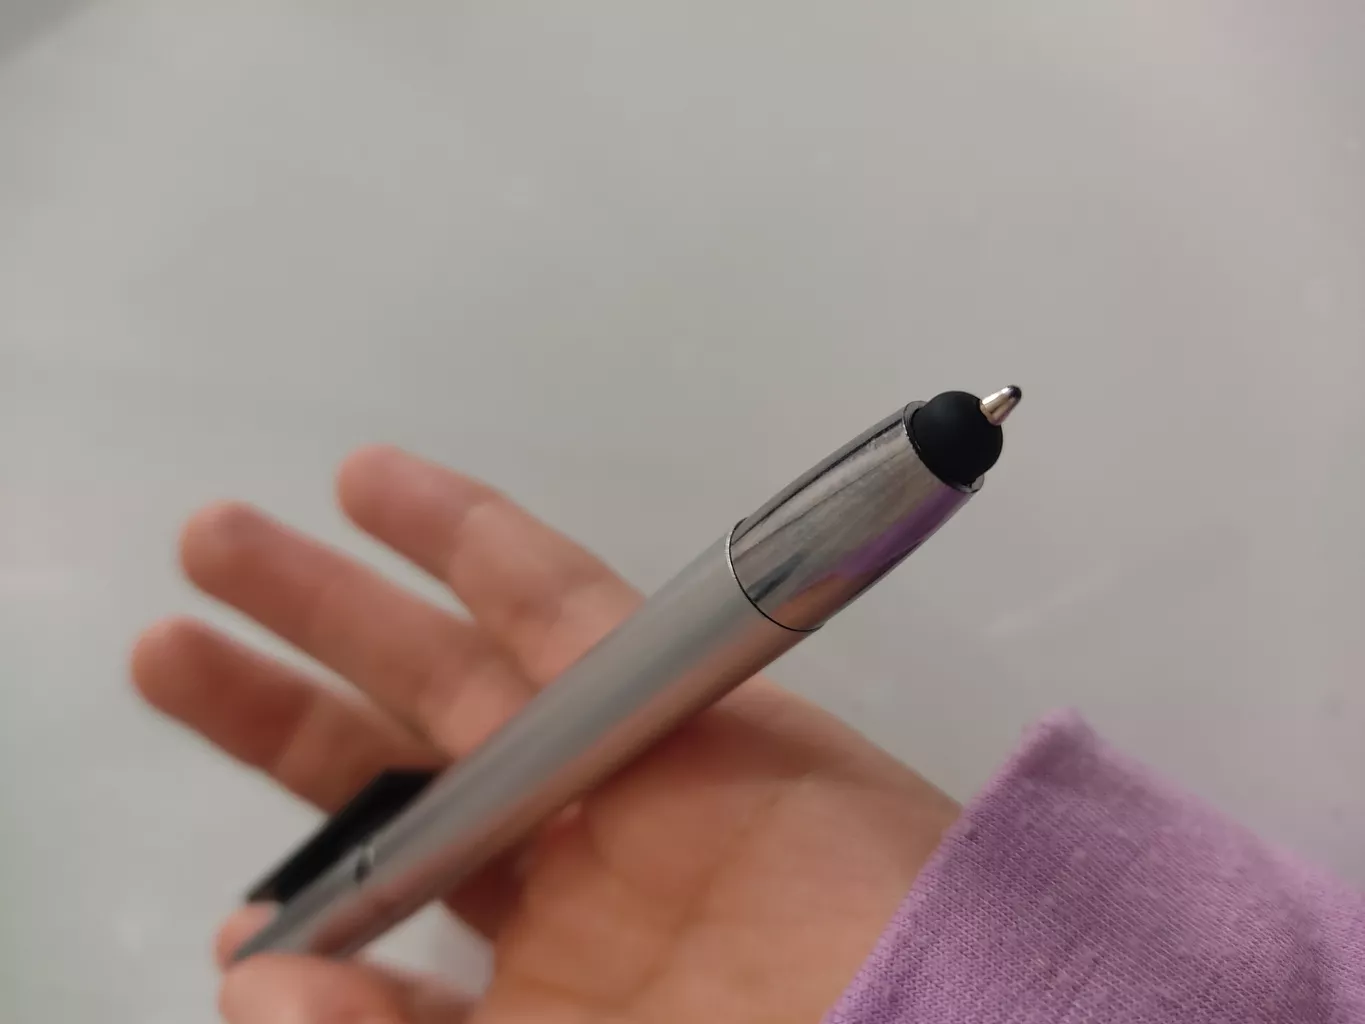 قلم لمسی مدل 4488PP102